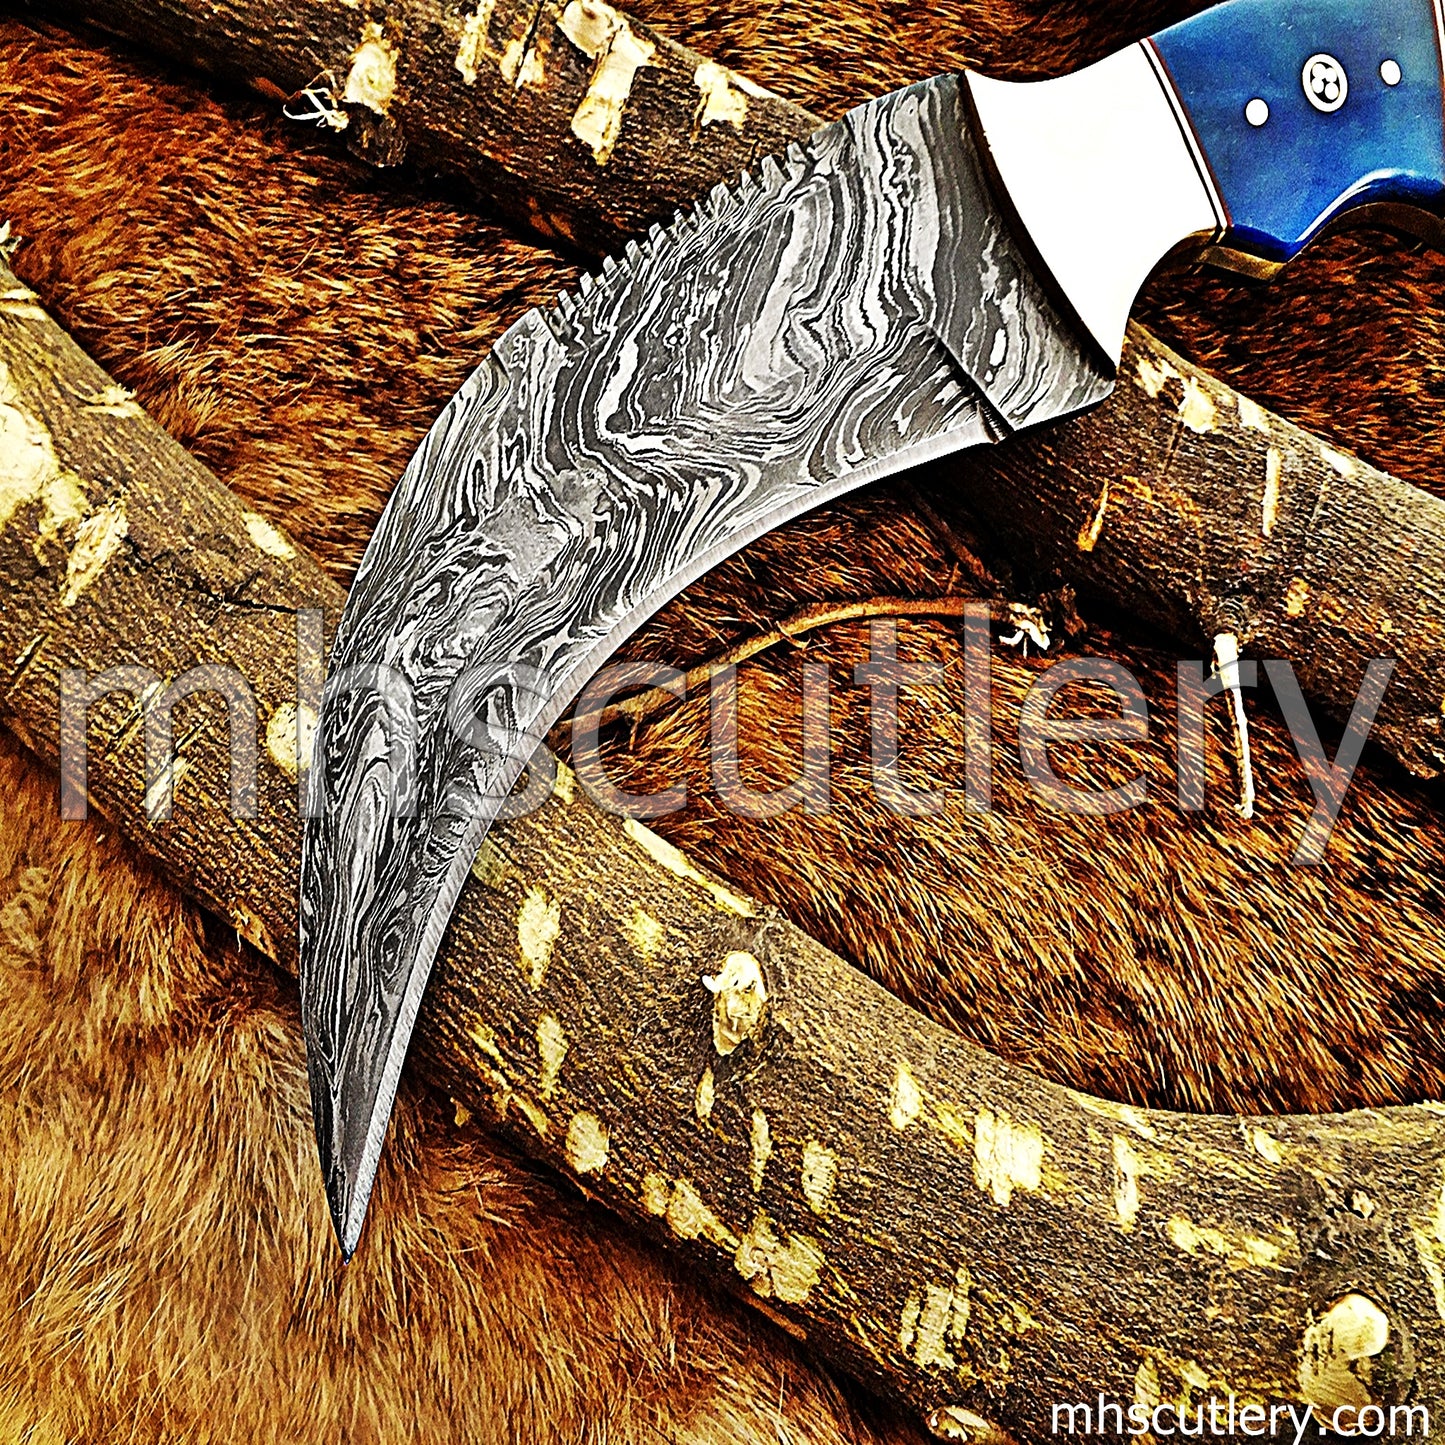 Damascus Steel Tactical Karambit Knife / Bone Handle | mhscutlery